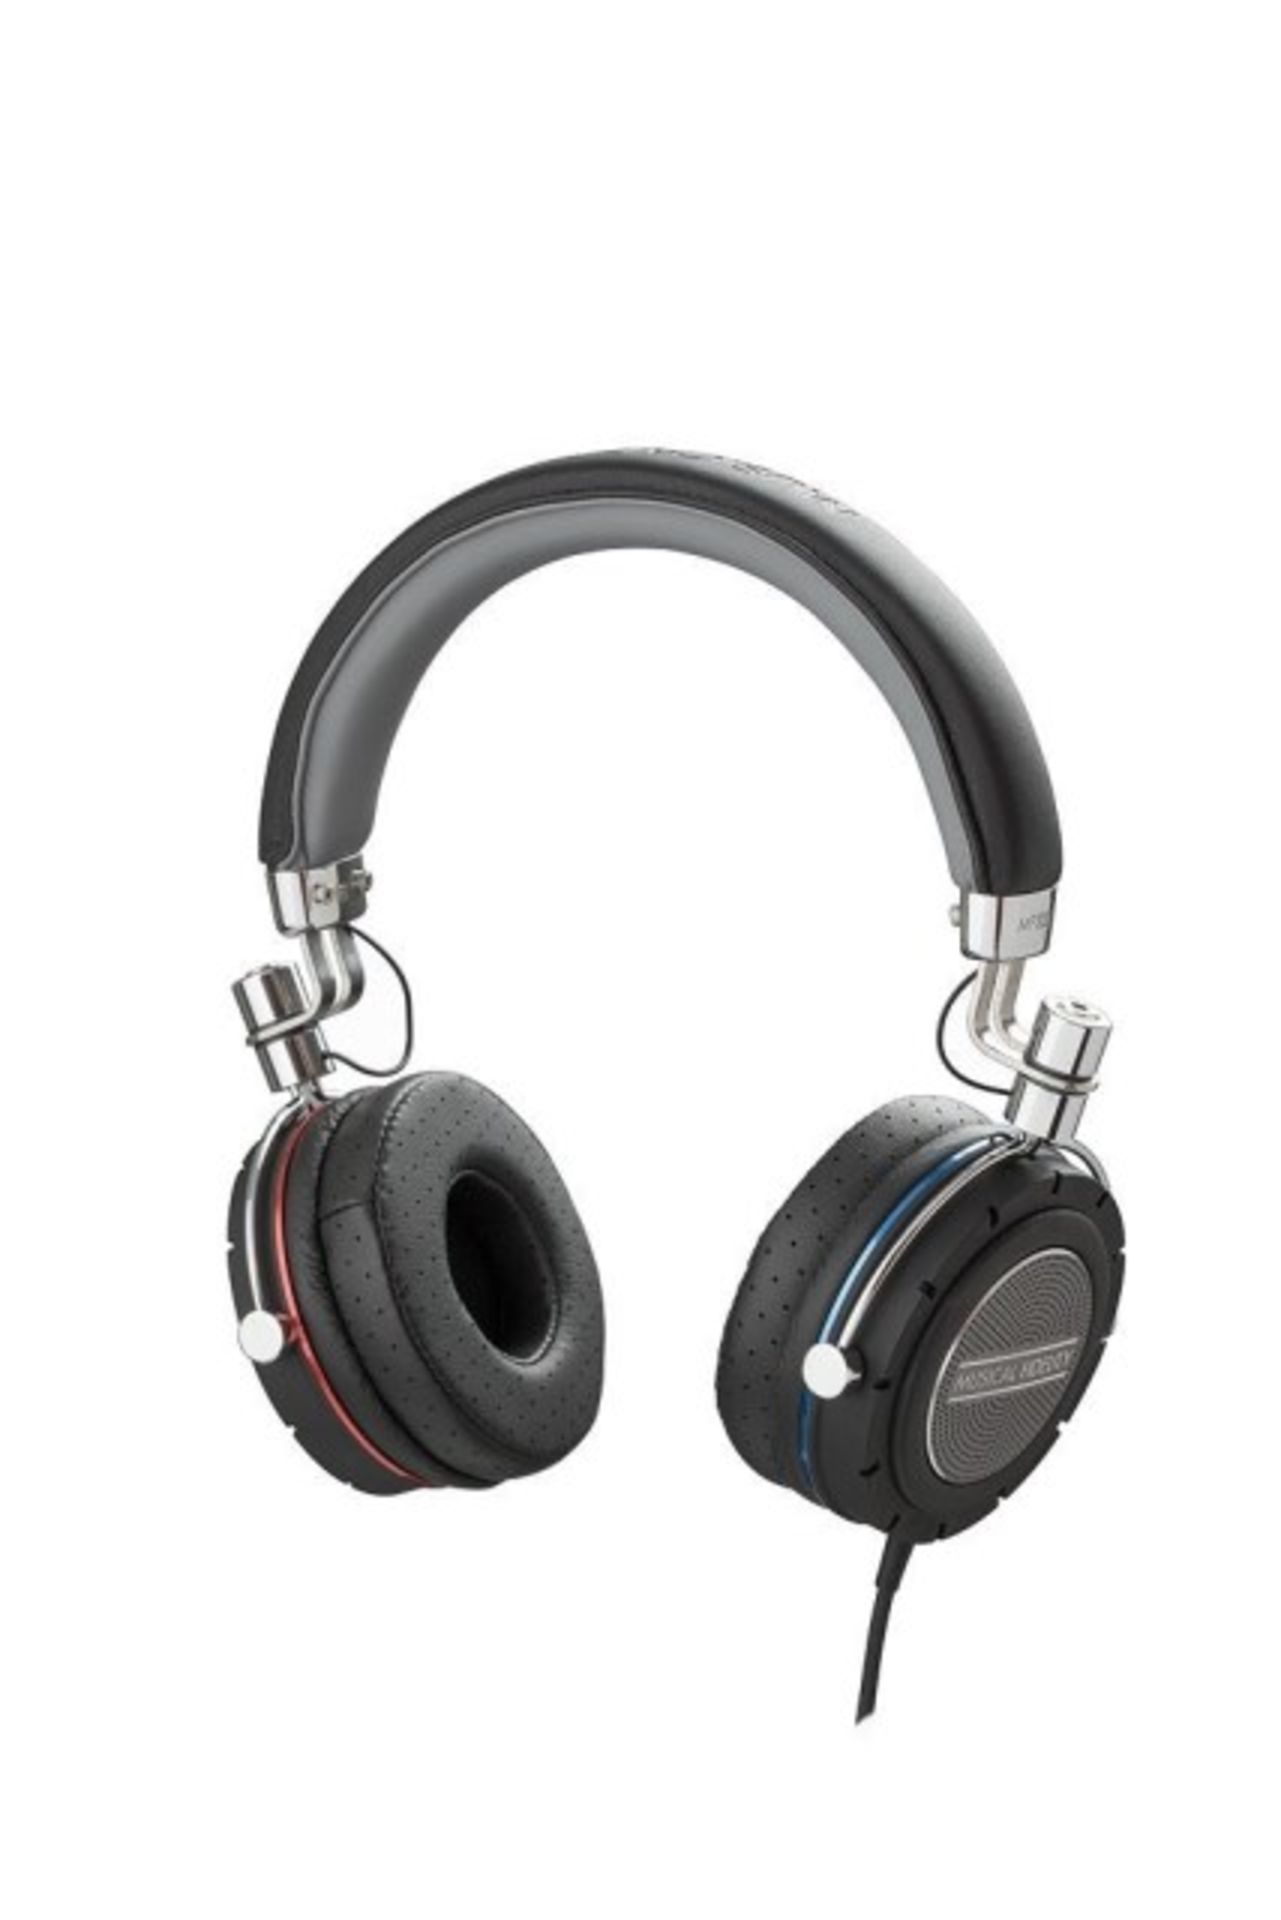 V *TRADE QTY* Brand New Musical Fidelity MF-200 Headphones (Brand New & Sealed) RRP £249 X 8 Bid